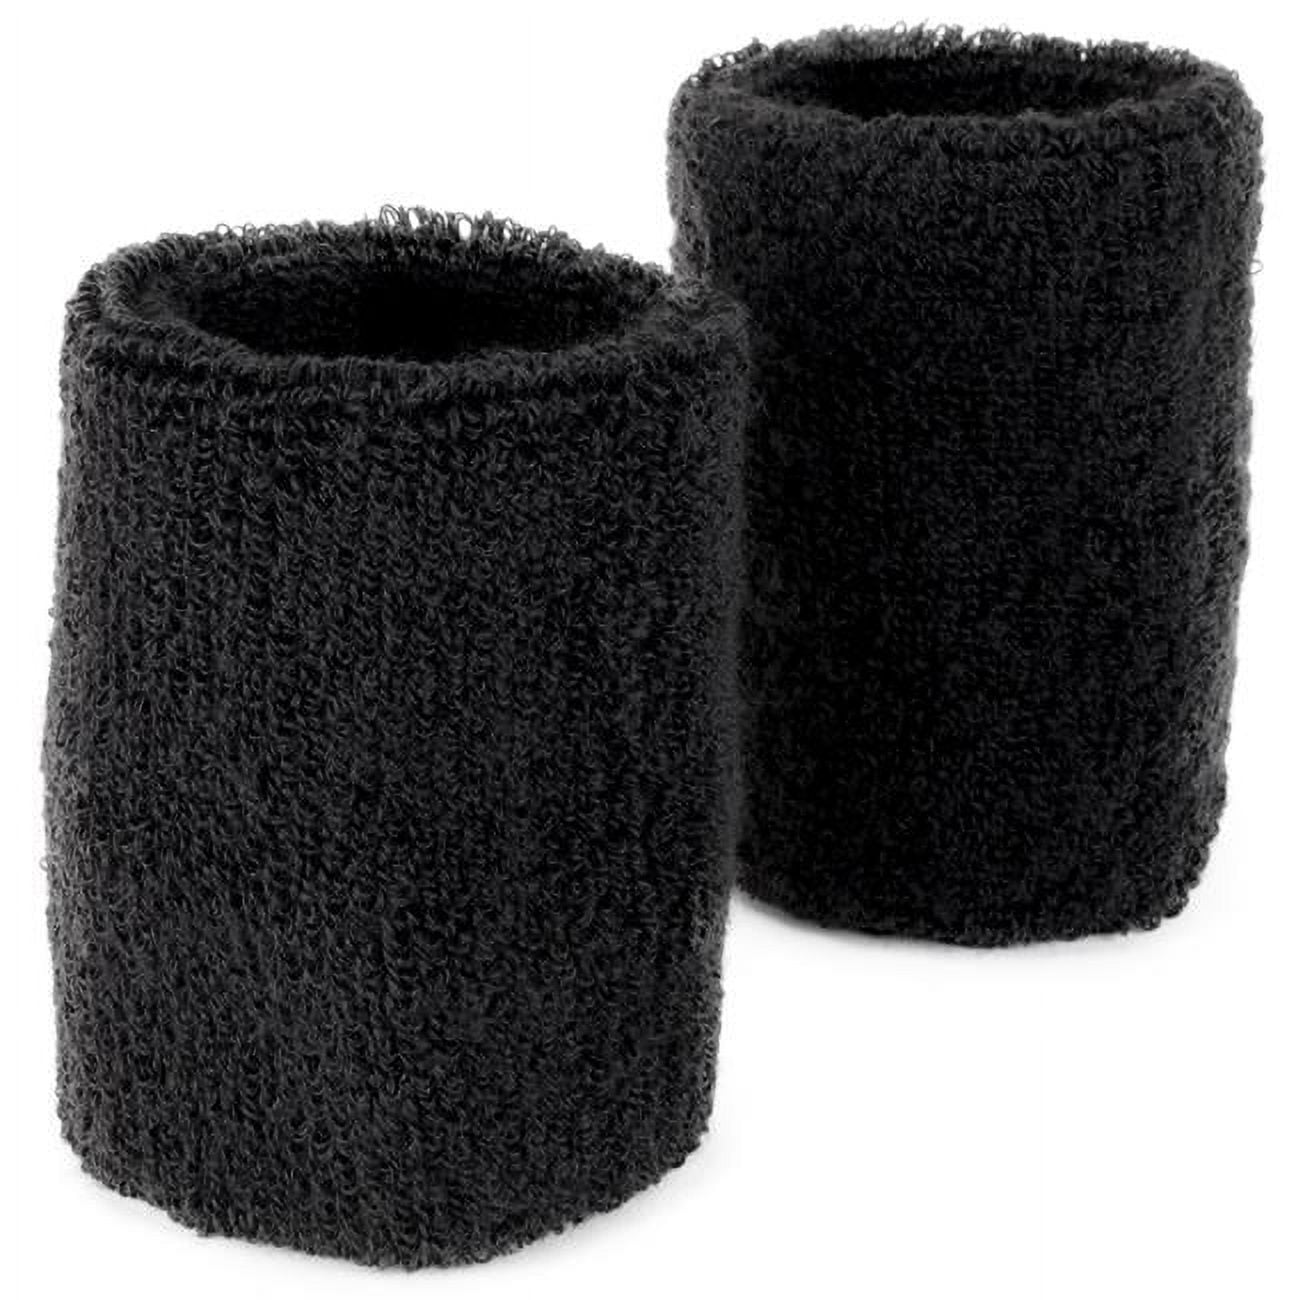 Sfit-1602 Wrist Sweatbands, Black - Pack Of 2